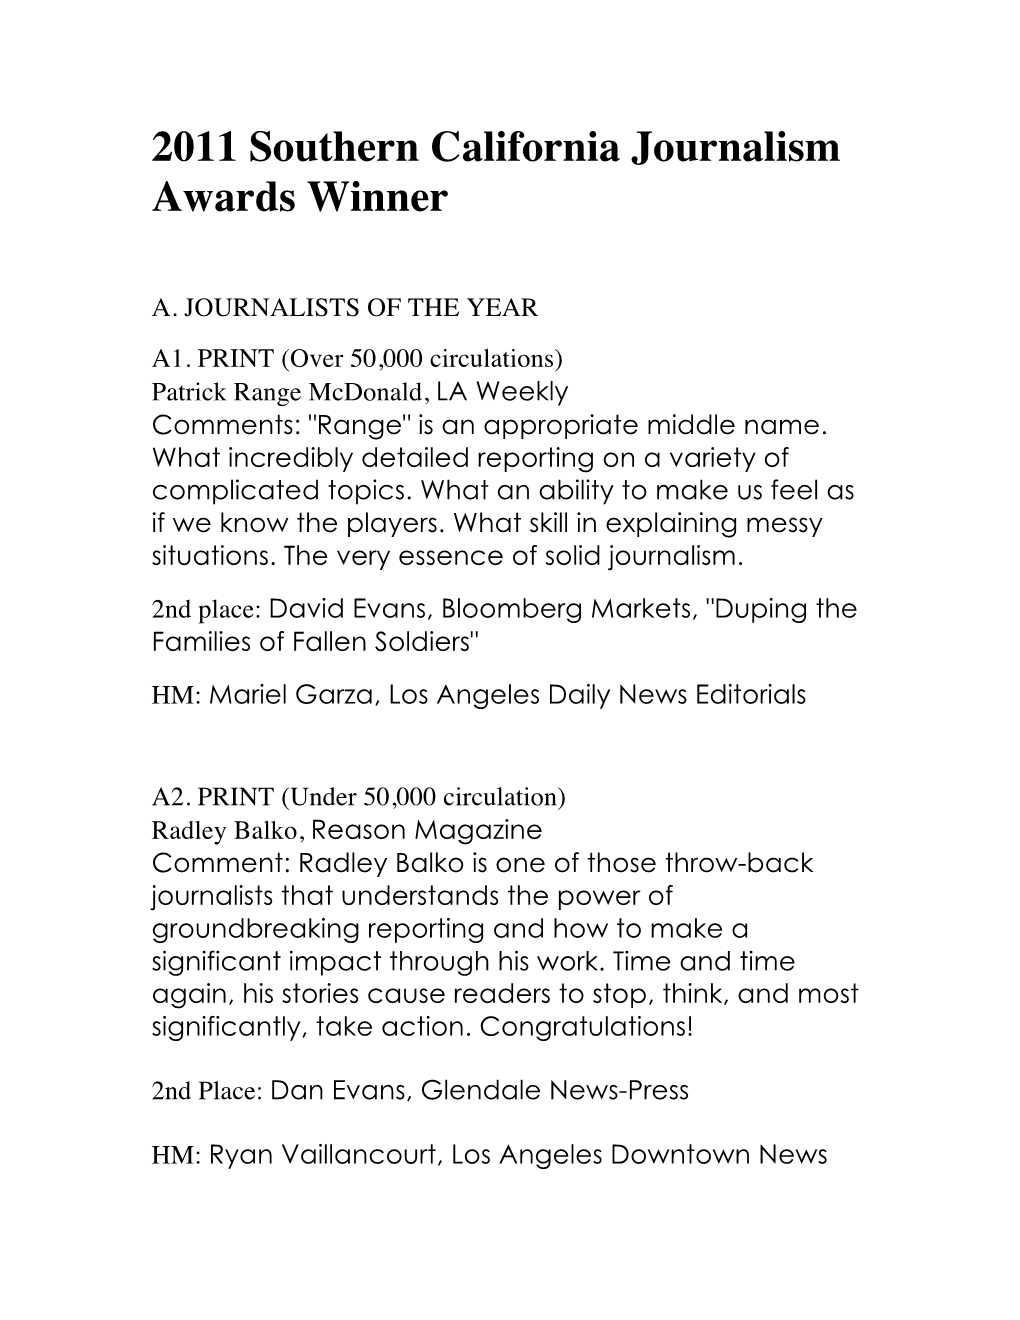 2011 Southern California Journalism Awards Winner